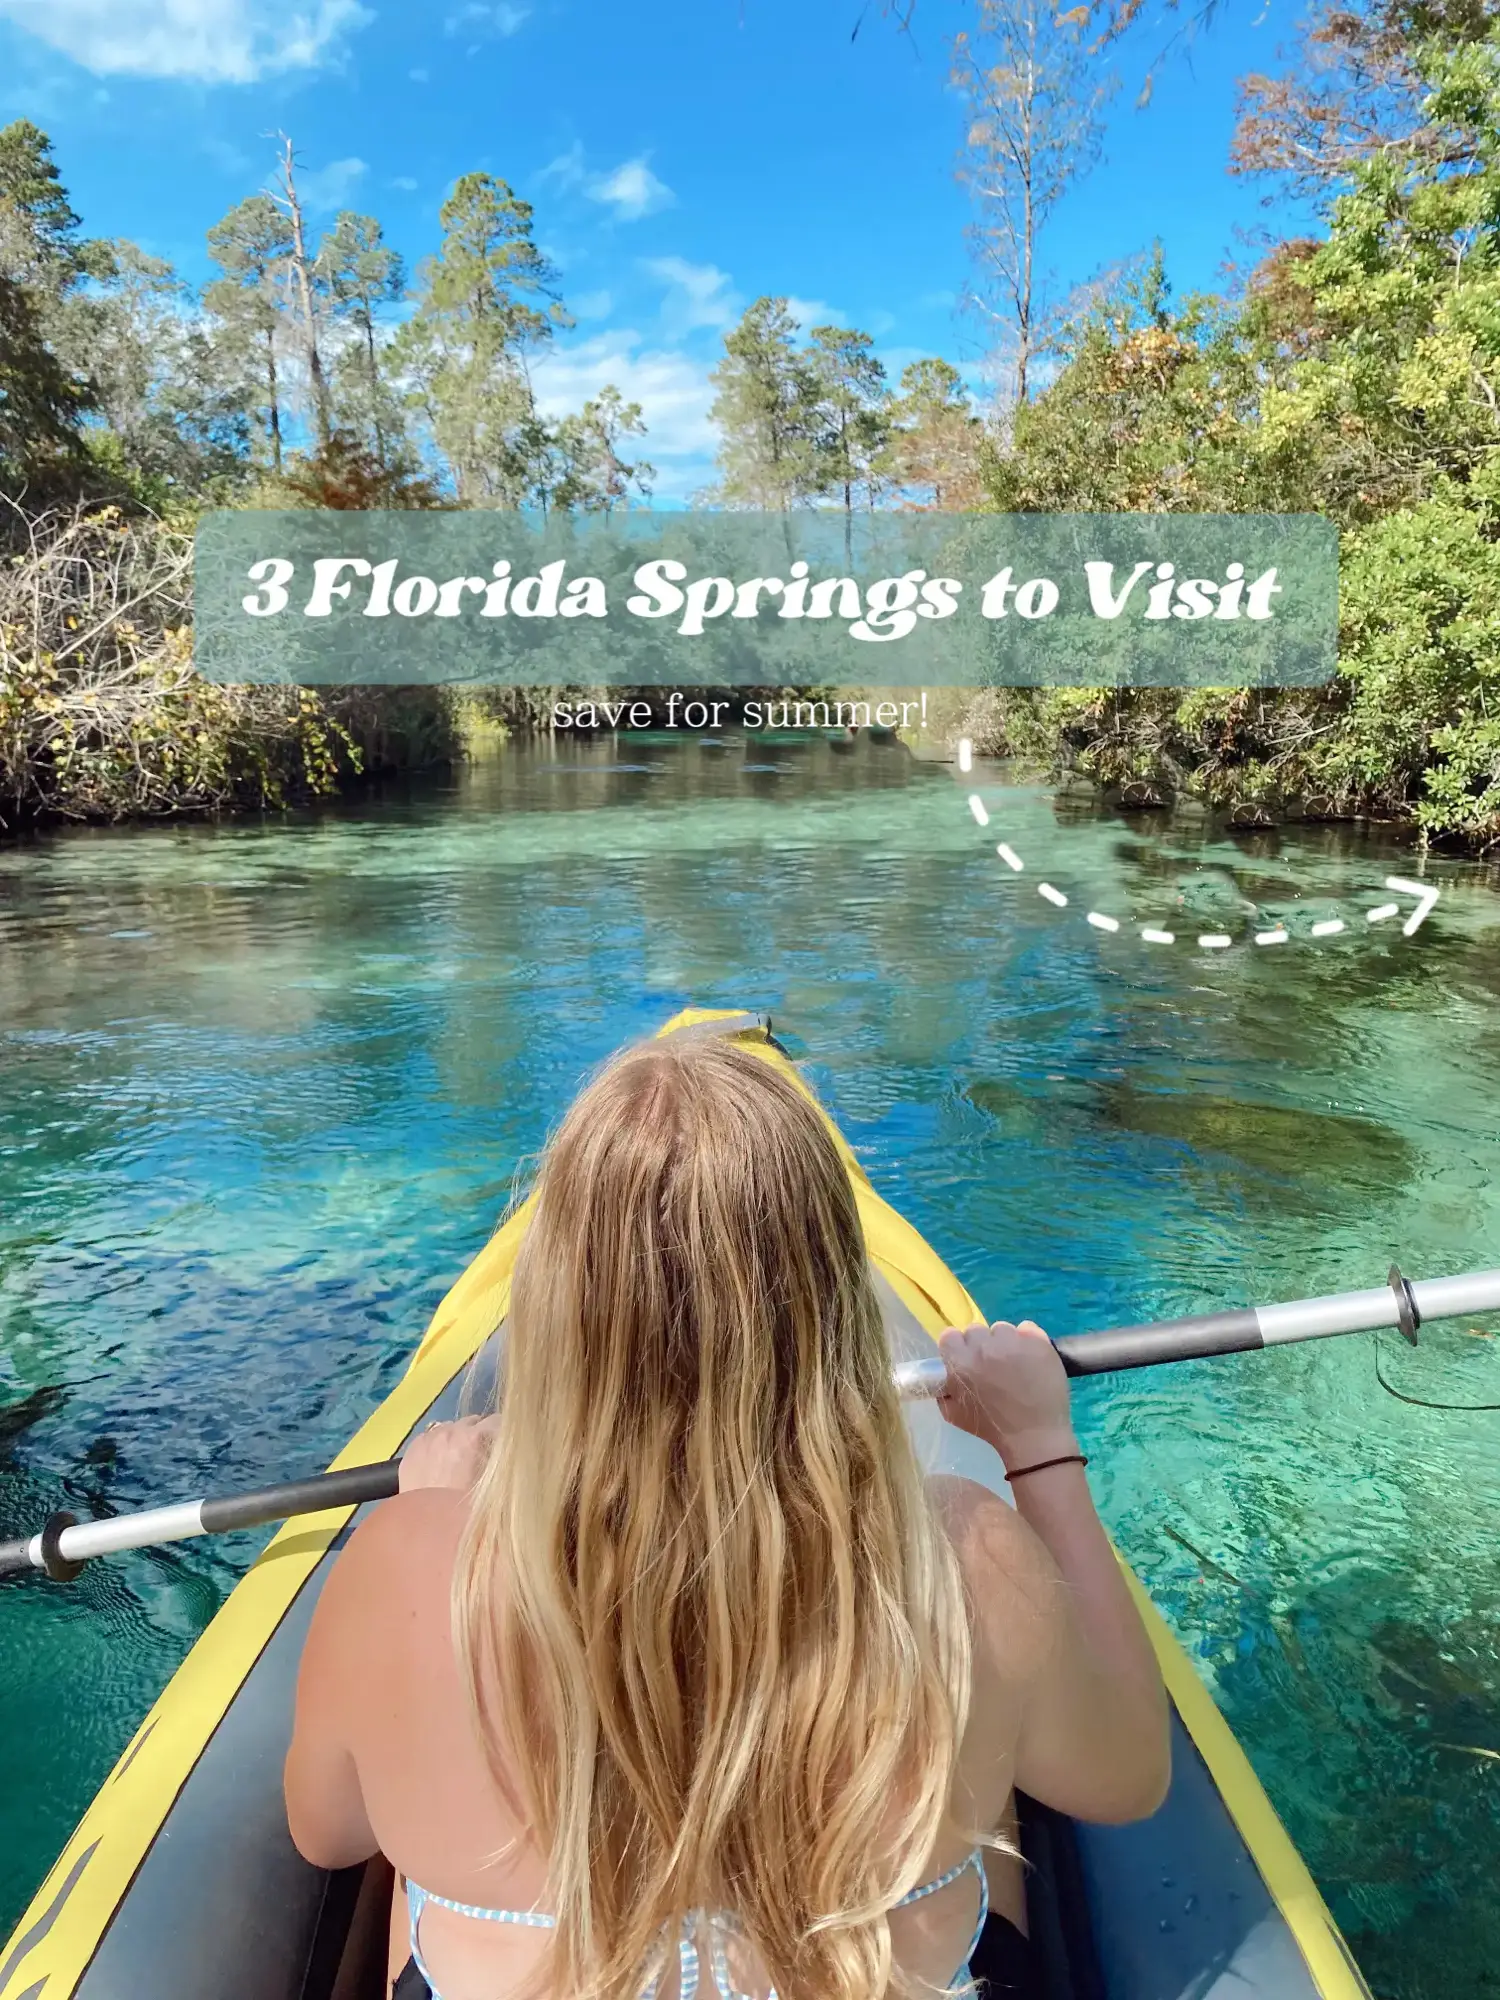 Florida Springs – Working to protect Florida's springs through